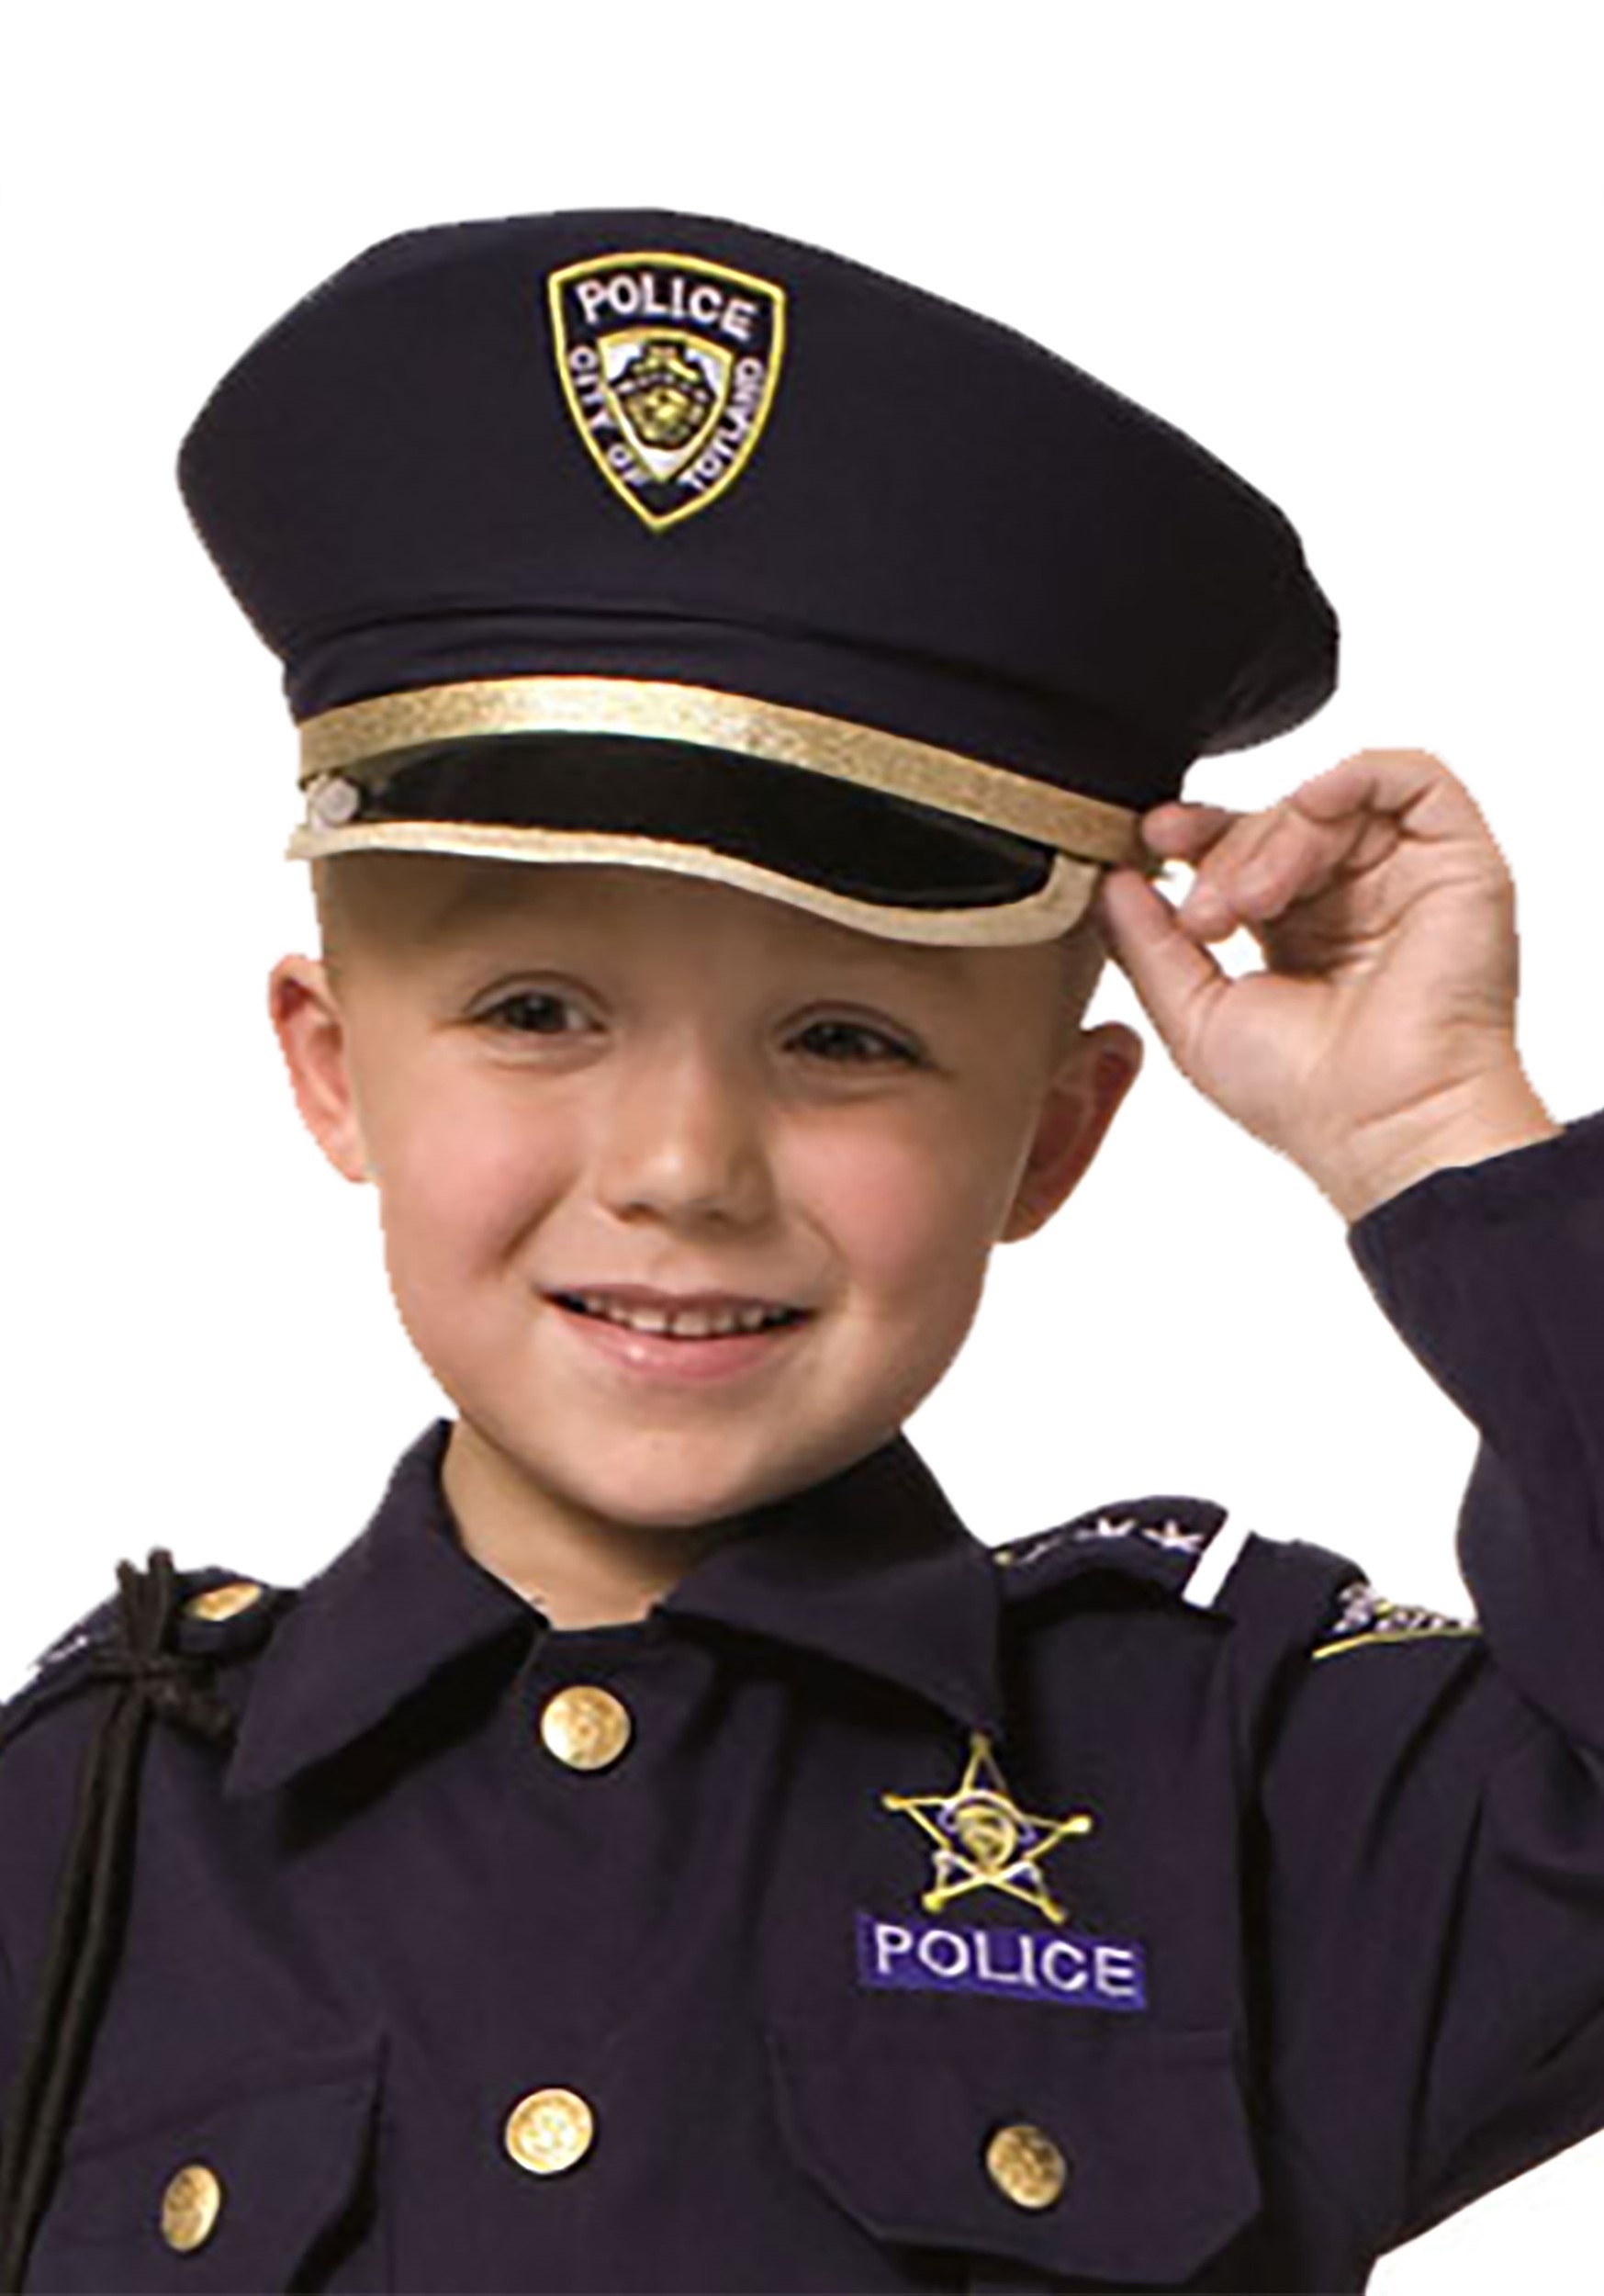 Child’s Police Hat